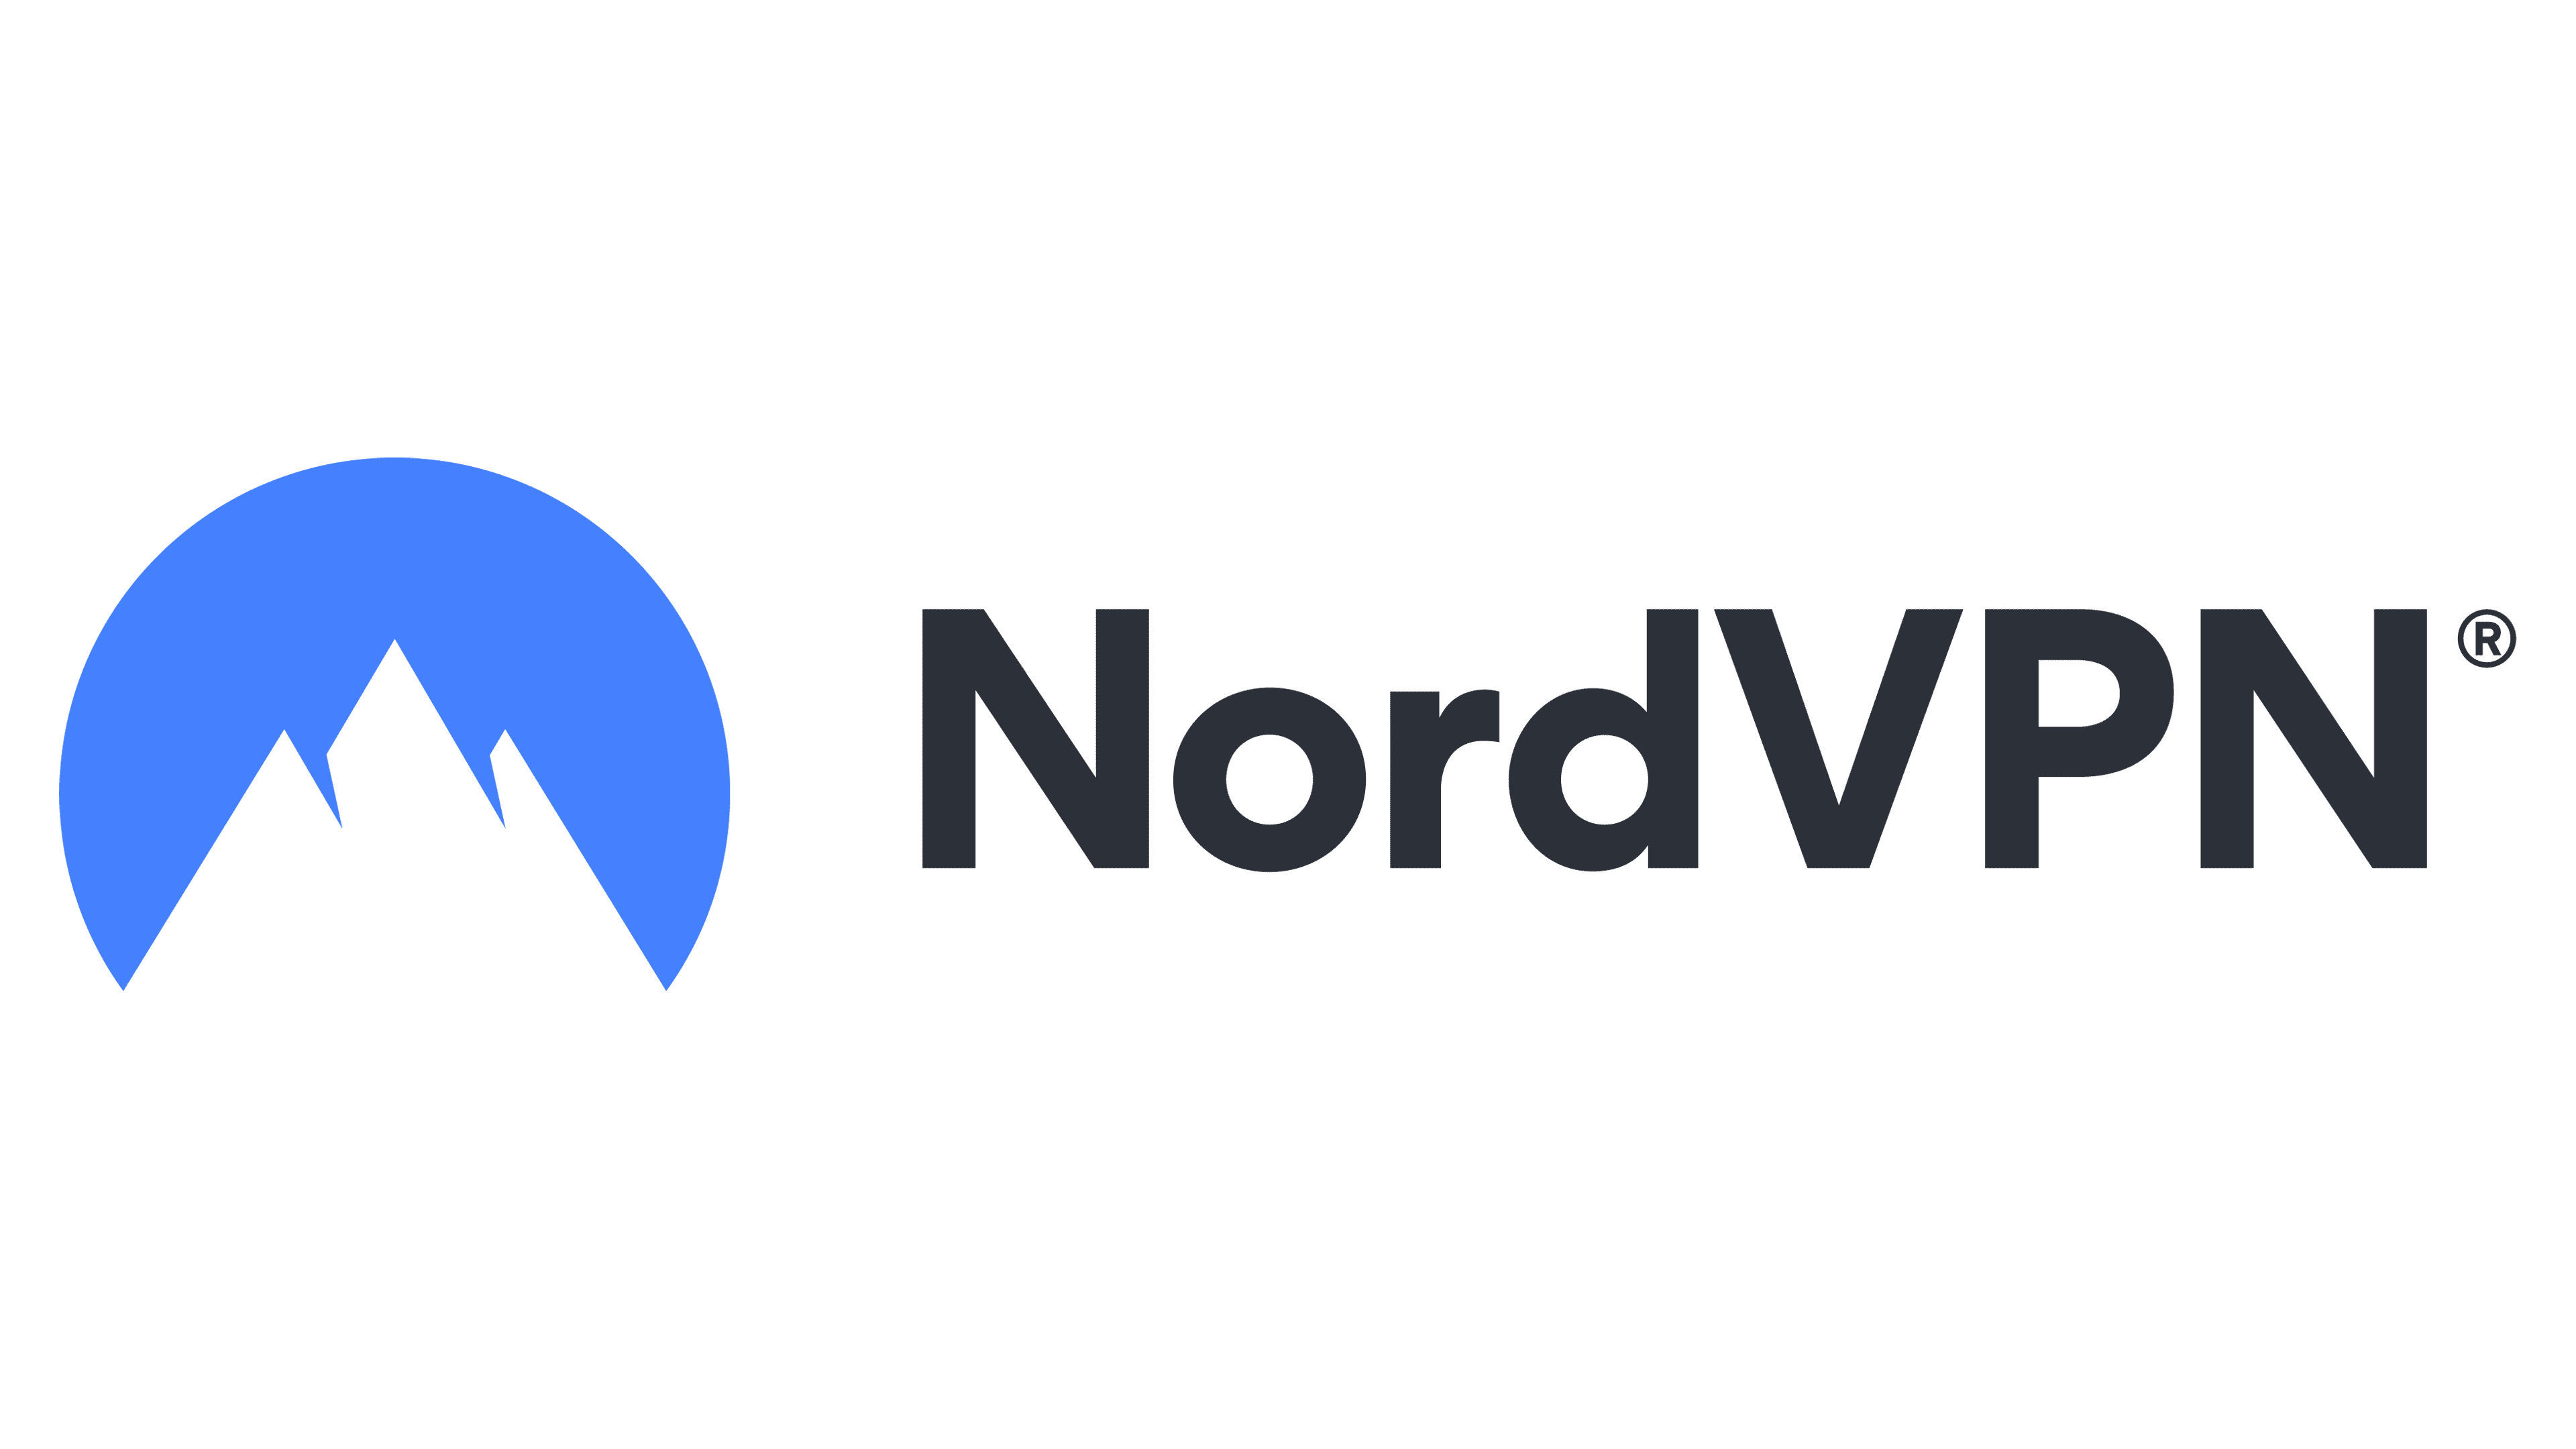 NordVPN Logo